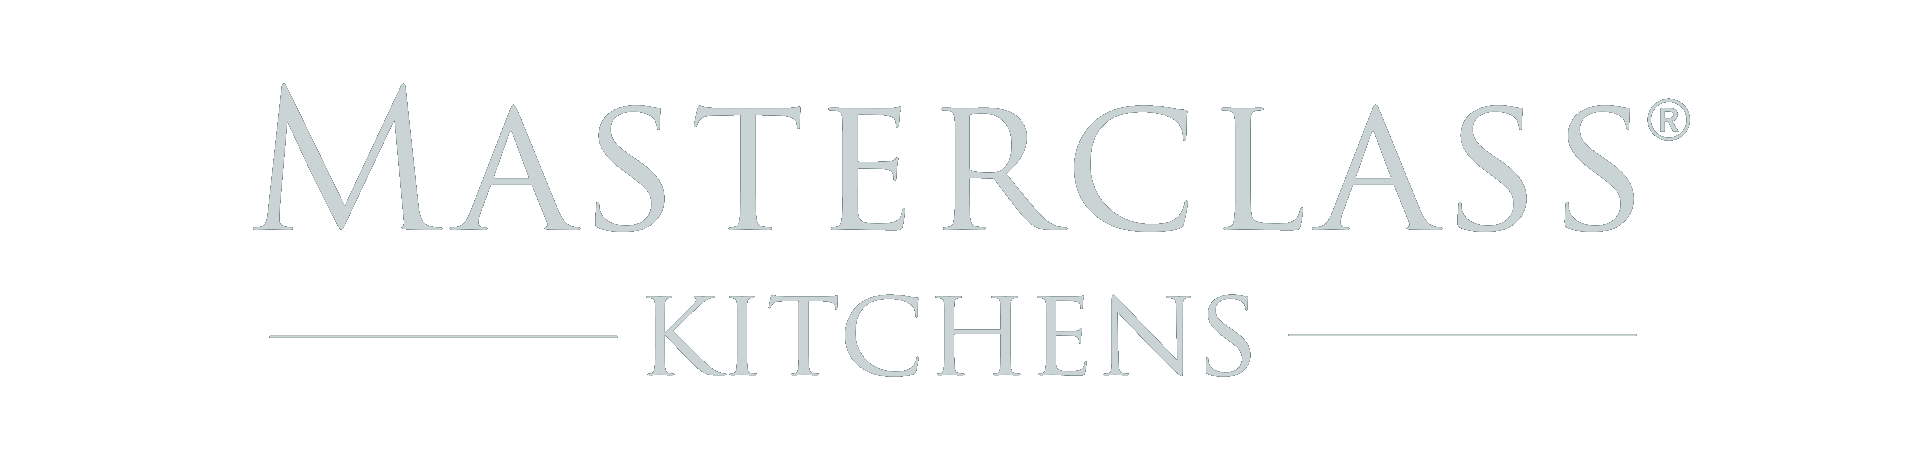 Masterclass Kitchens Logo